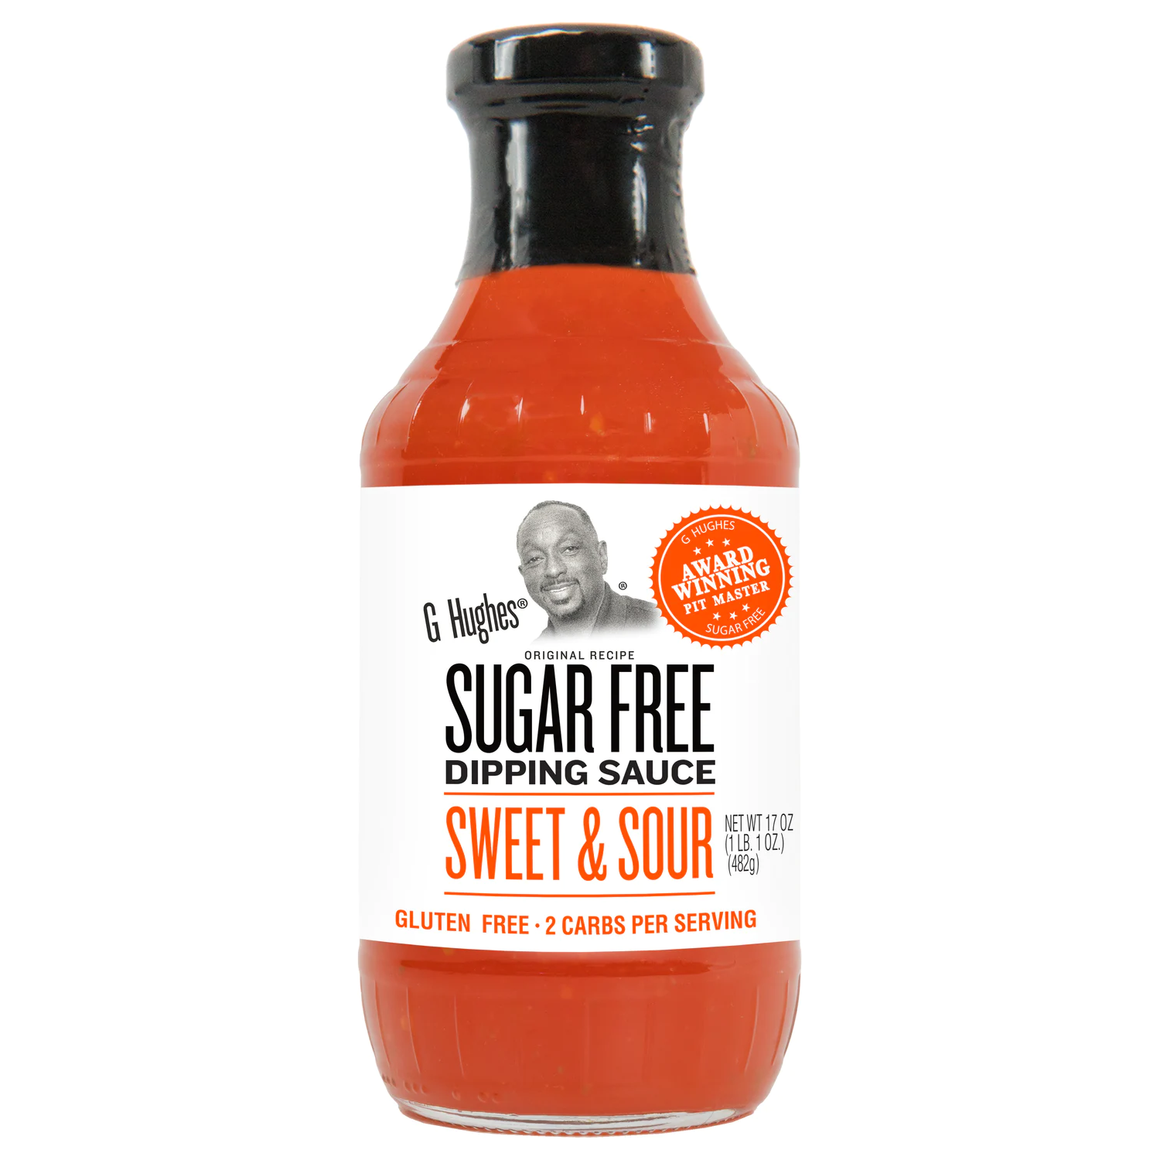 G Hughes Dipping Sauce - Sugar Free Sweet & Sour Sauce - 17 oz.